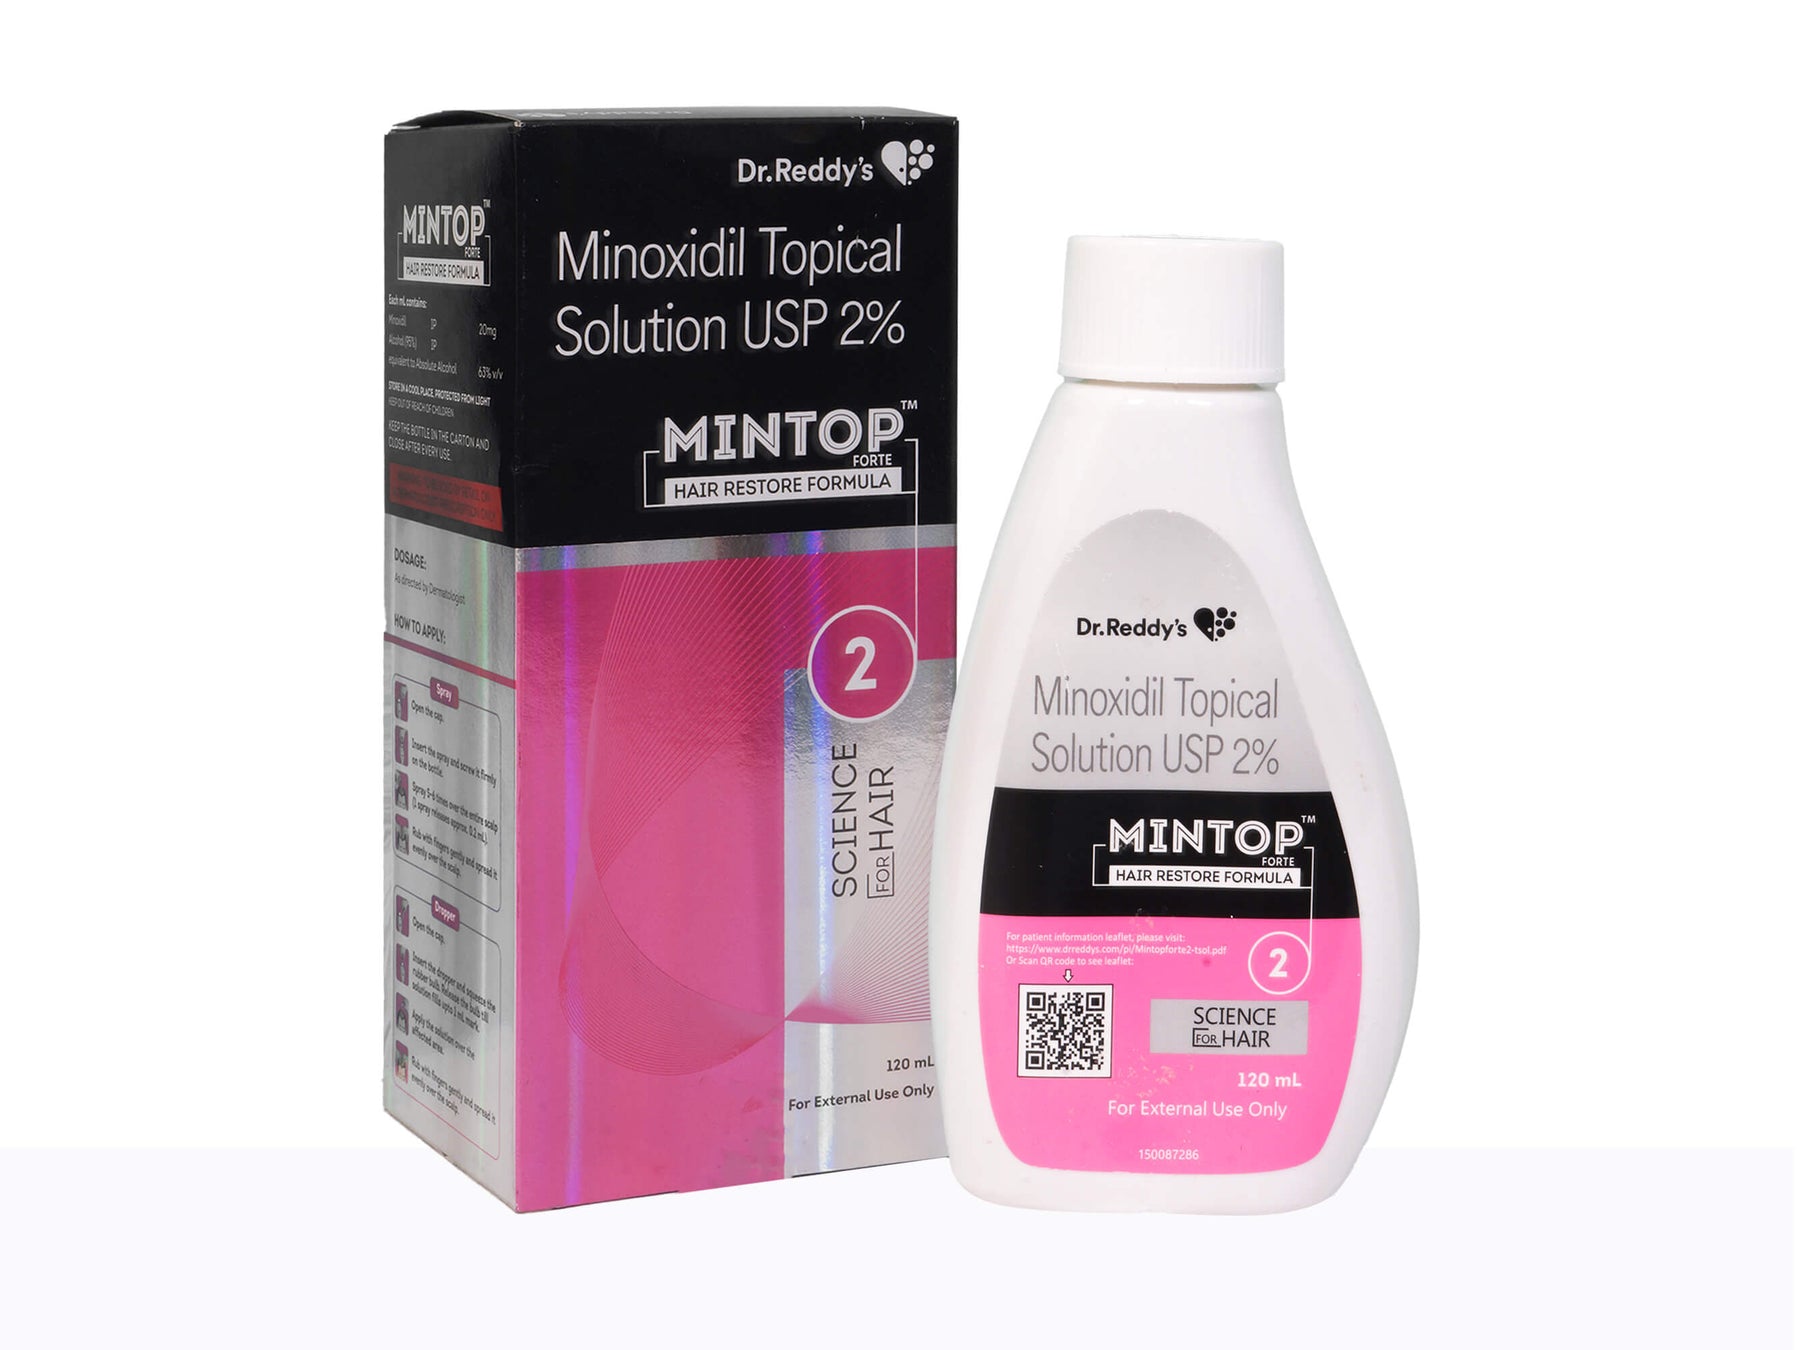 Mintop Yuva Minoxidil Topical Solution USP 5% W/V